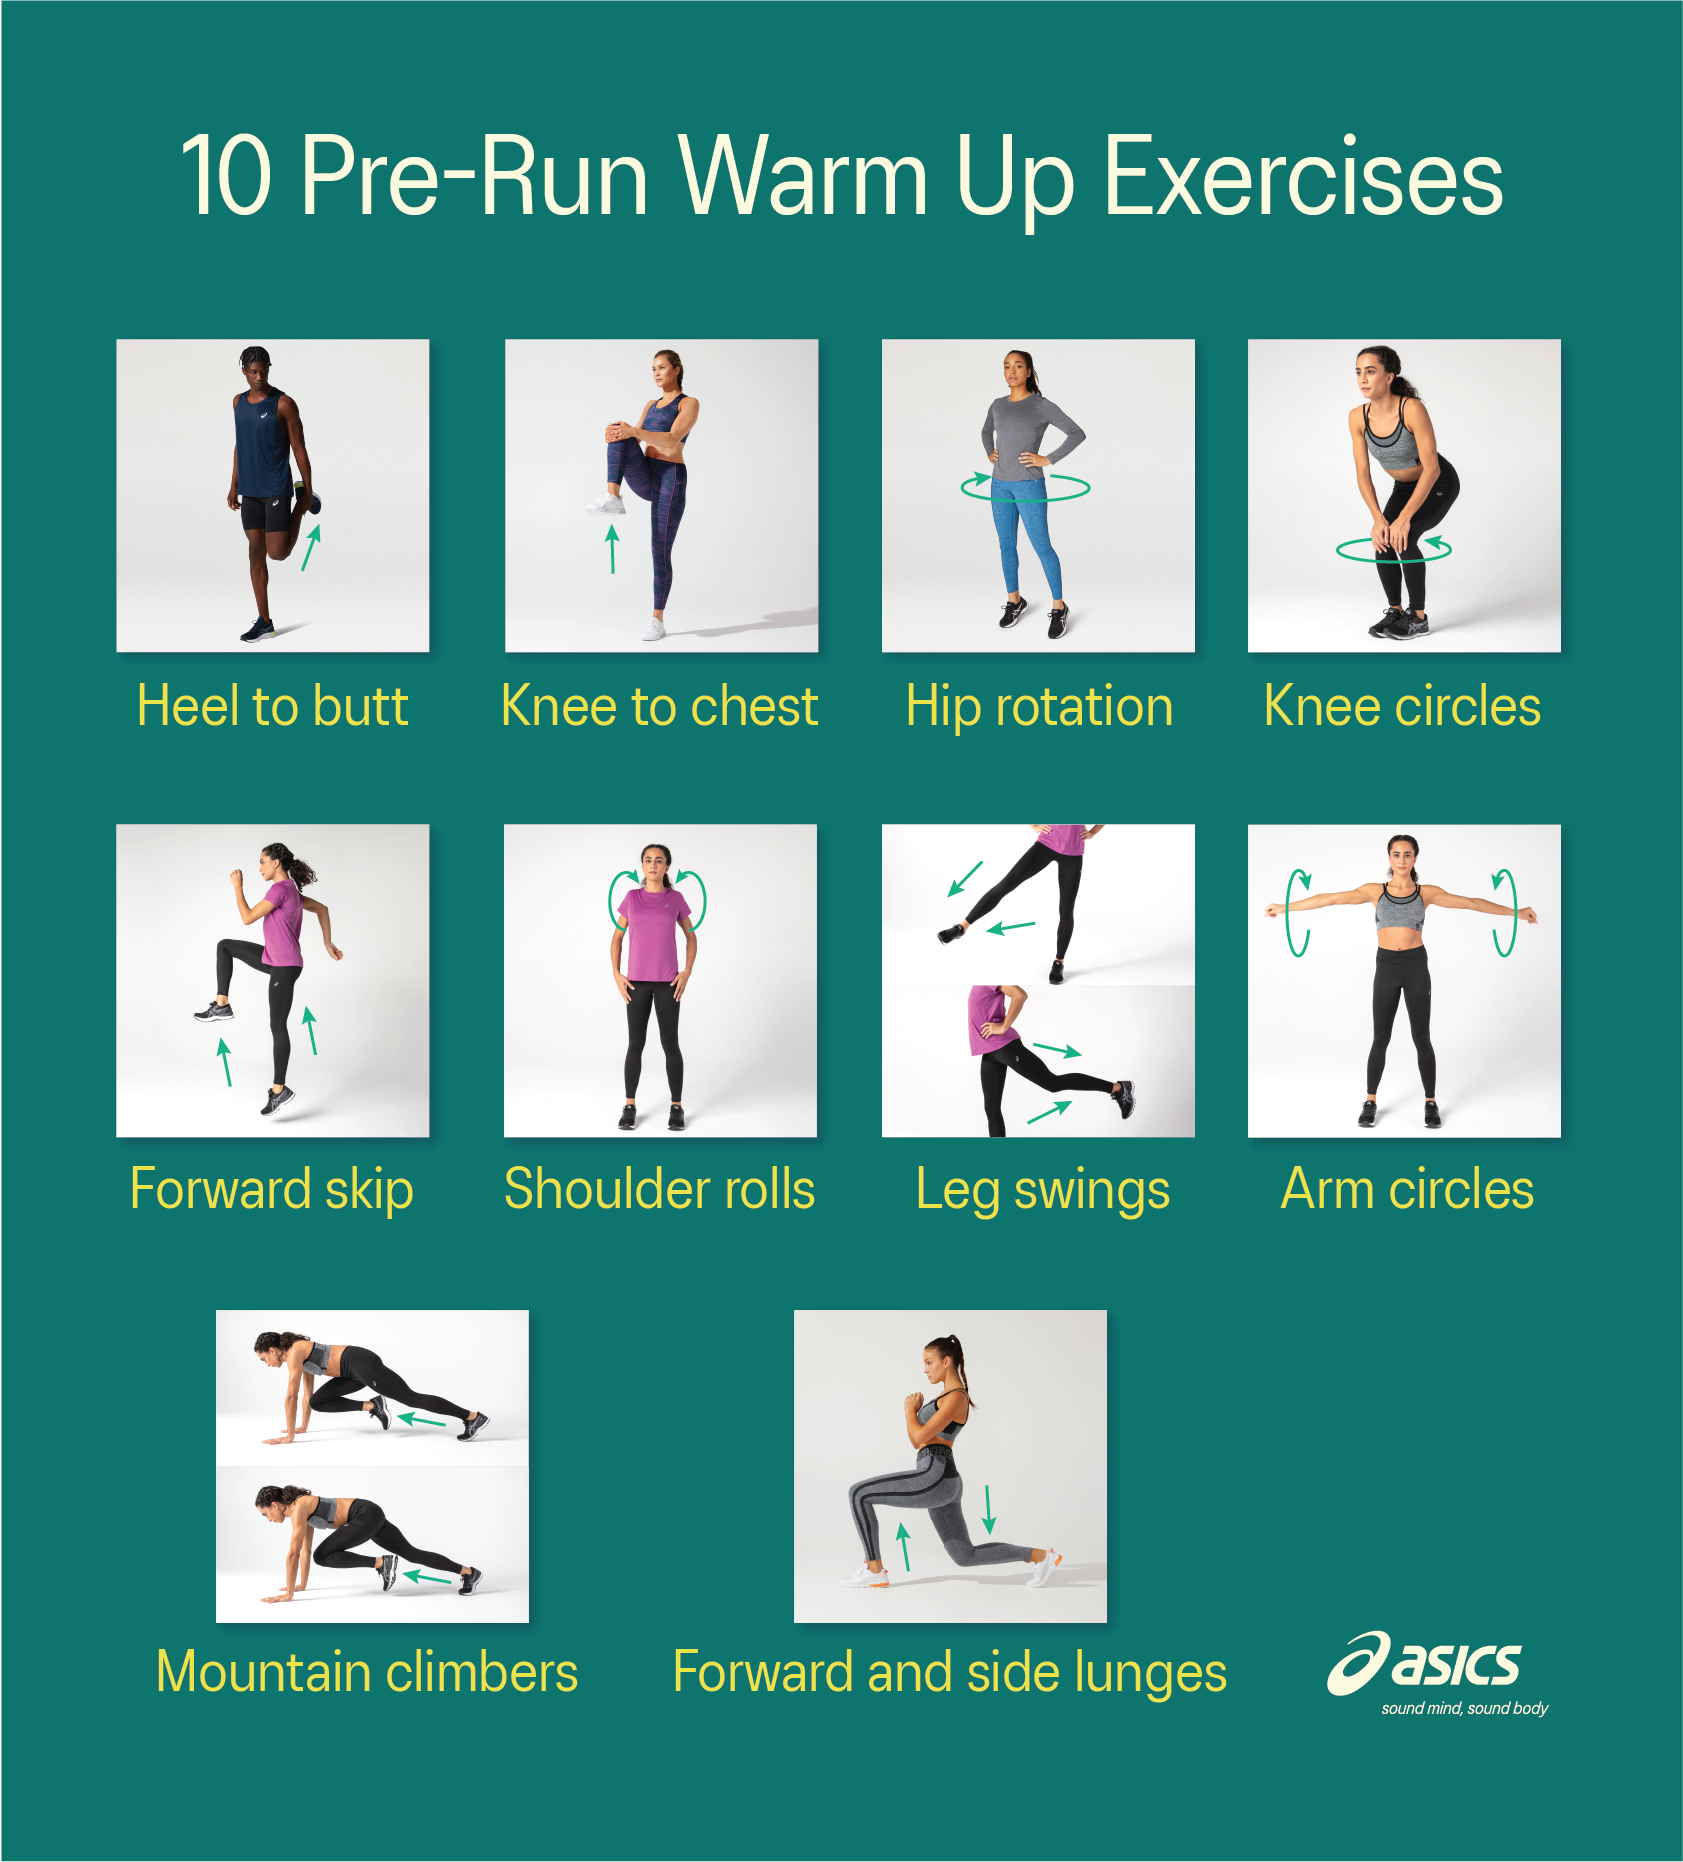 10 pre-run warm up exercises